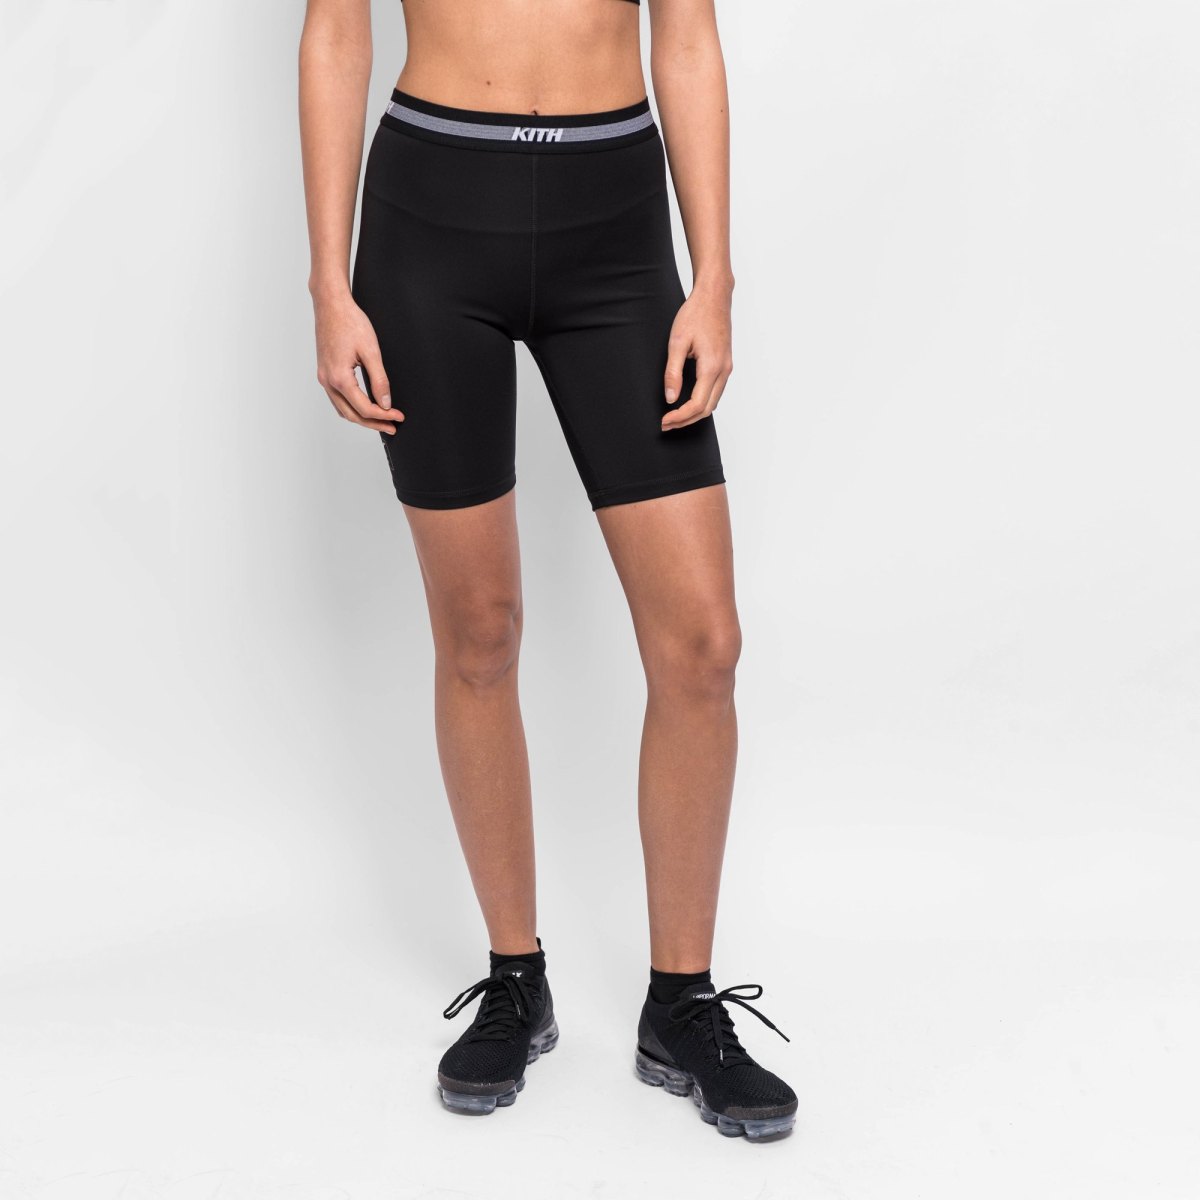 Kendall Jenner's Biker Shorts: Shop A Similar Pair Under $25